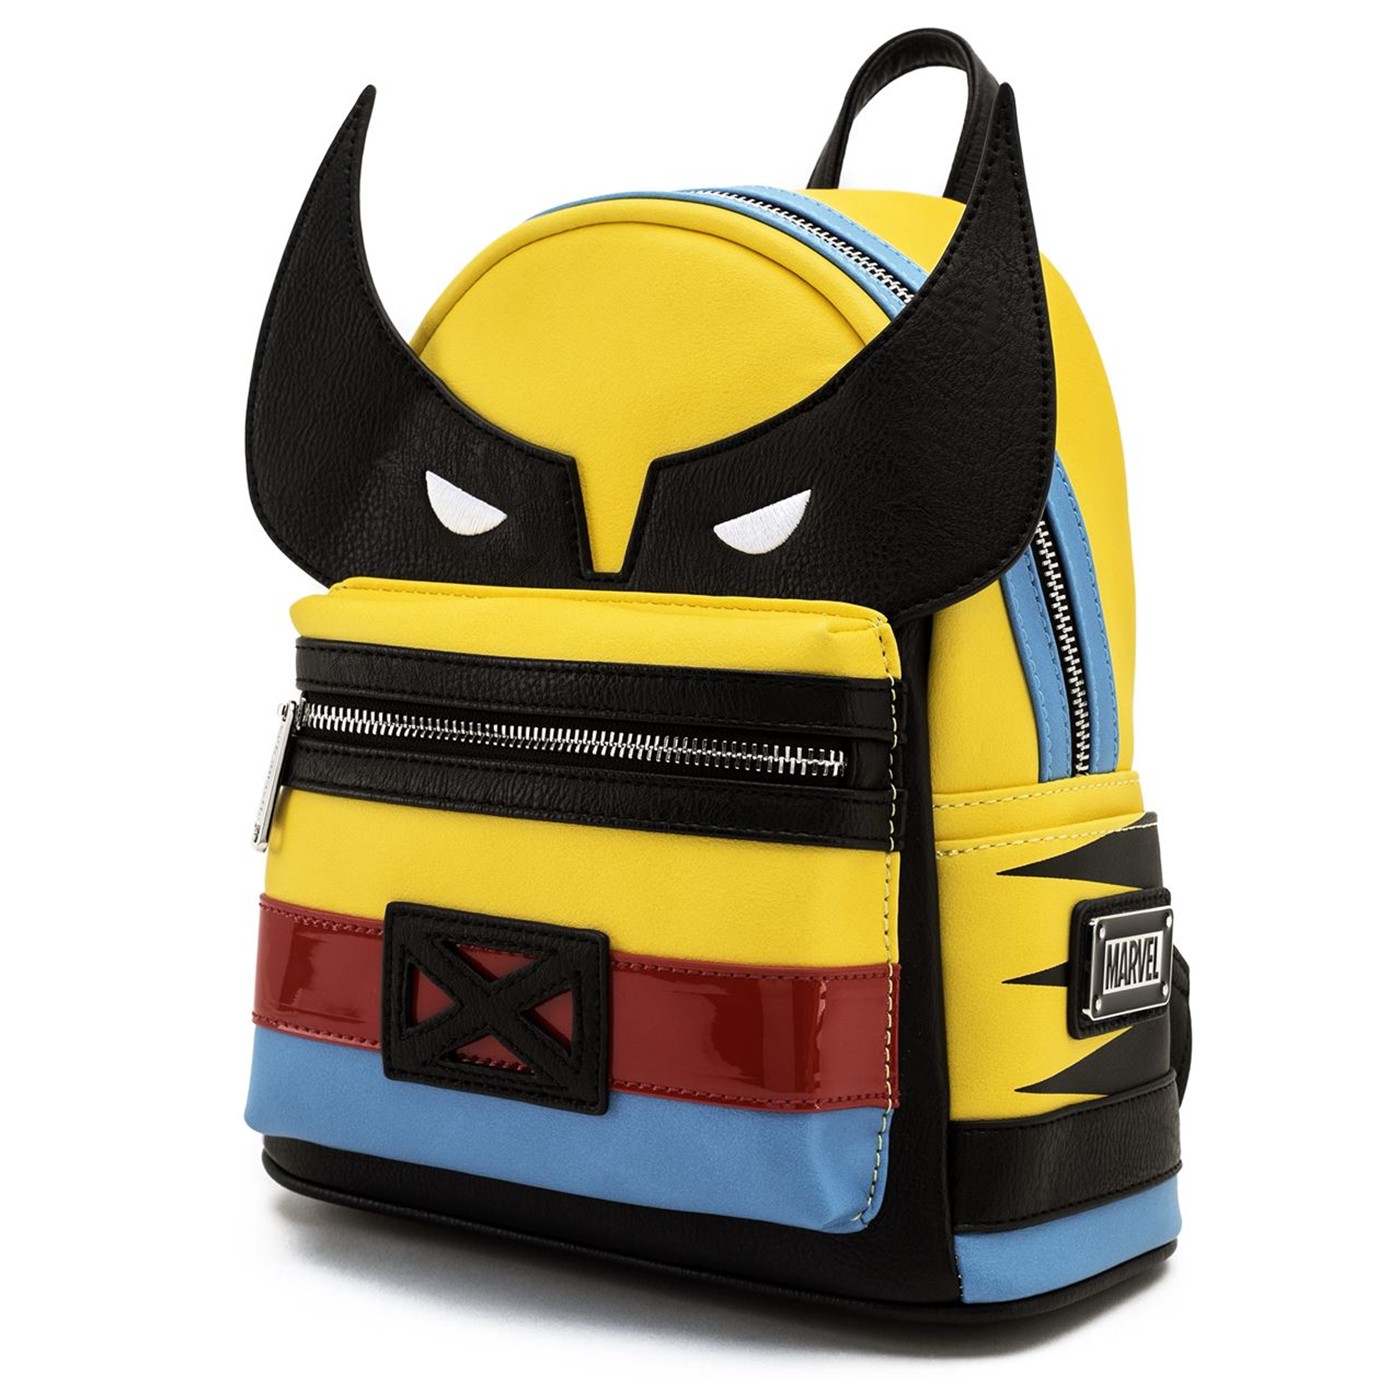 X-Men Wolverine Cosplay Mini Backpack